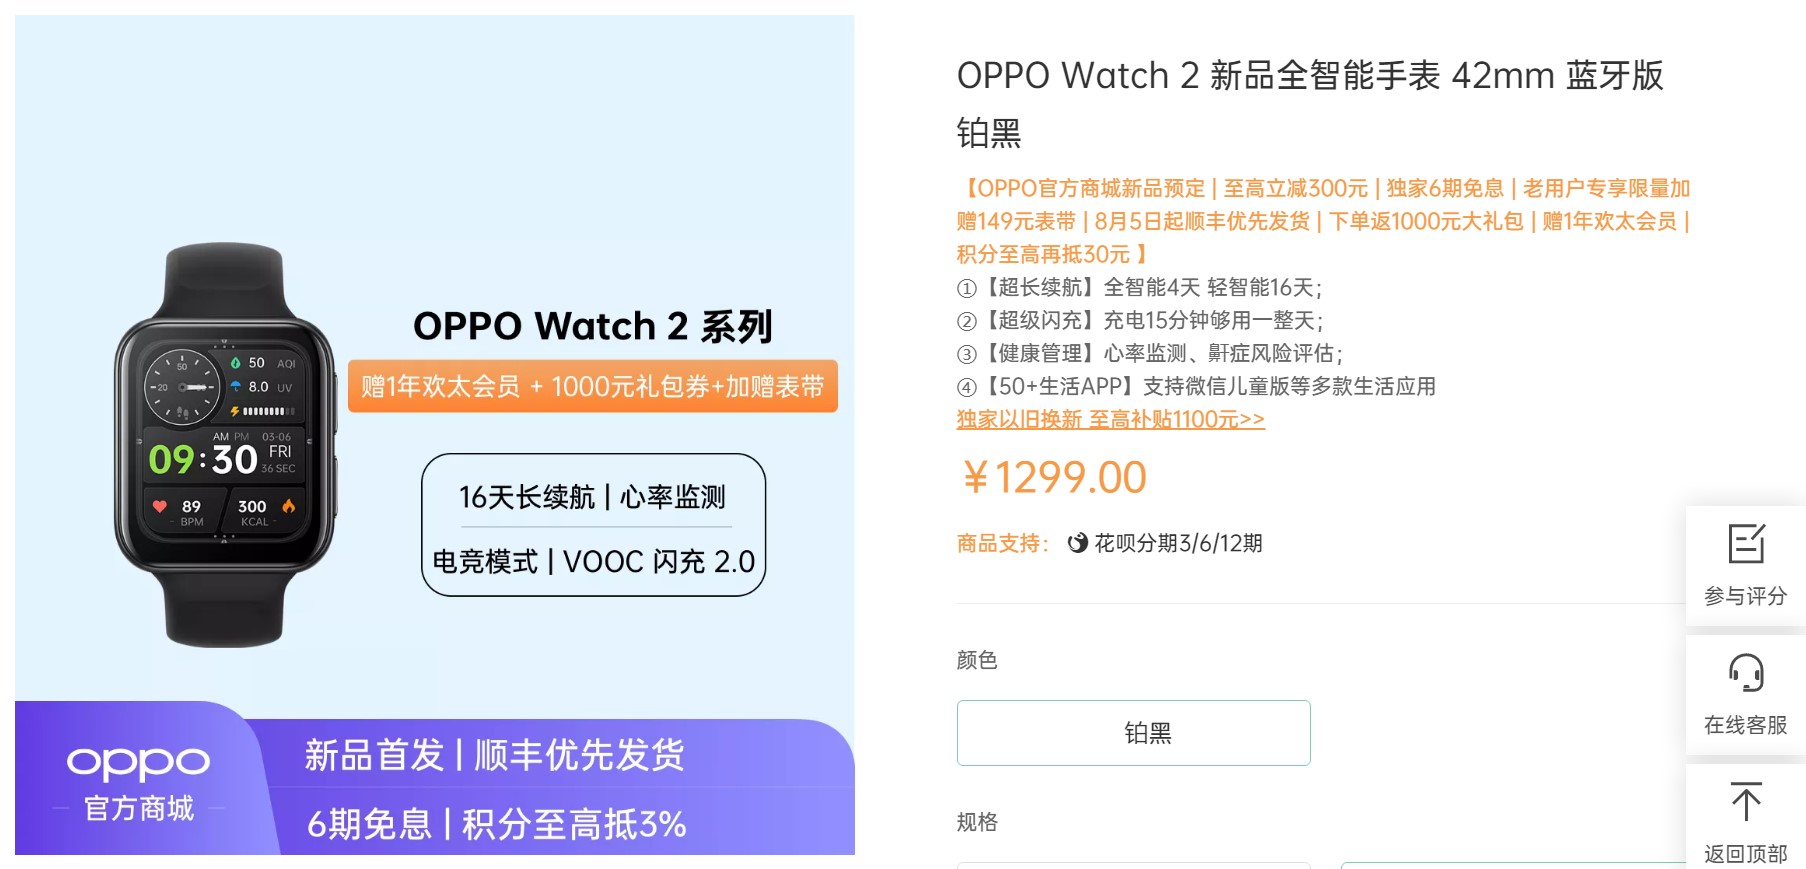 OPPO Watch 2智能手表发布 售价1299元 还有电竞模式